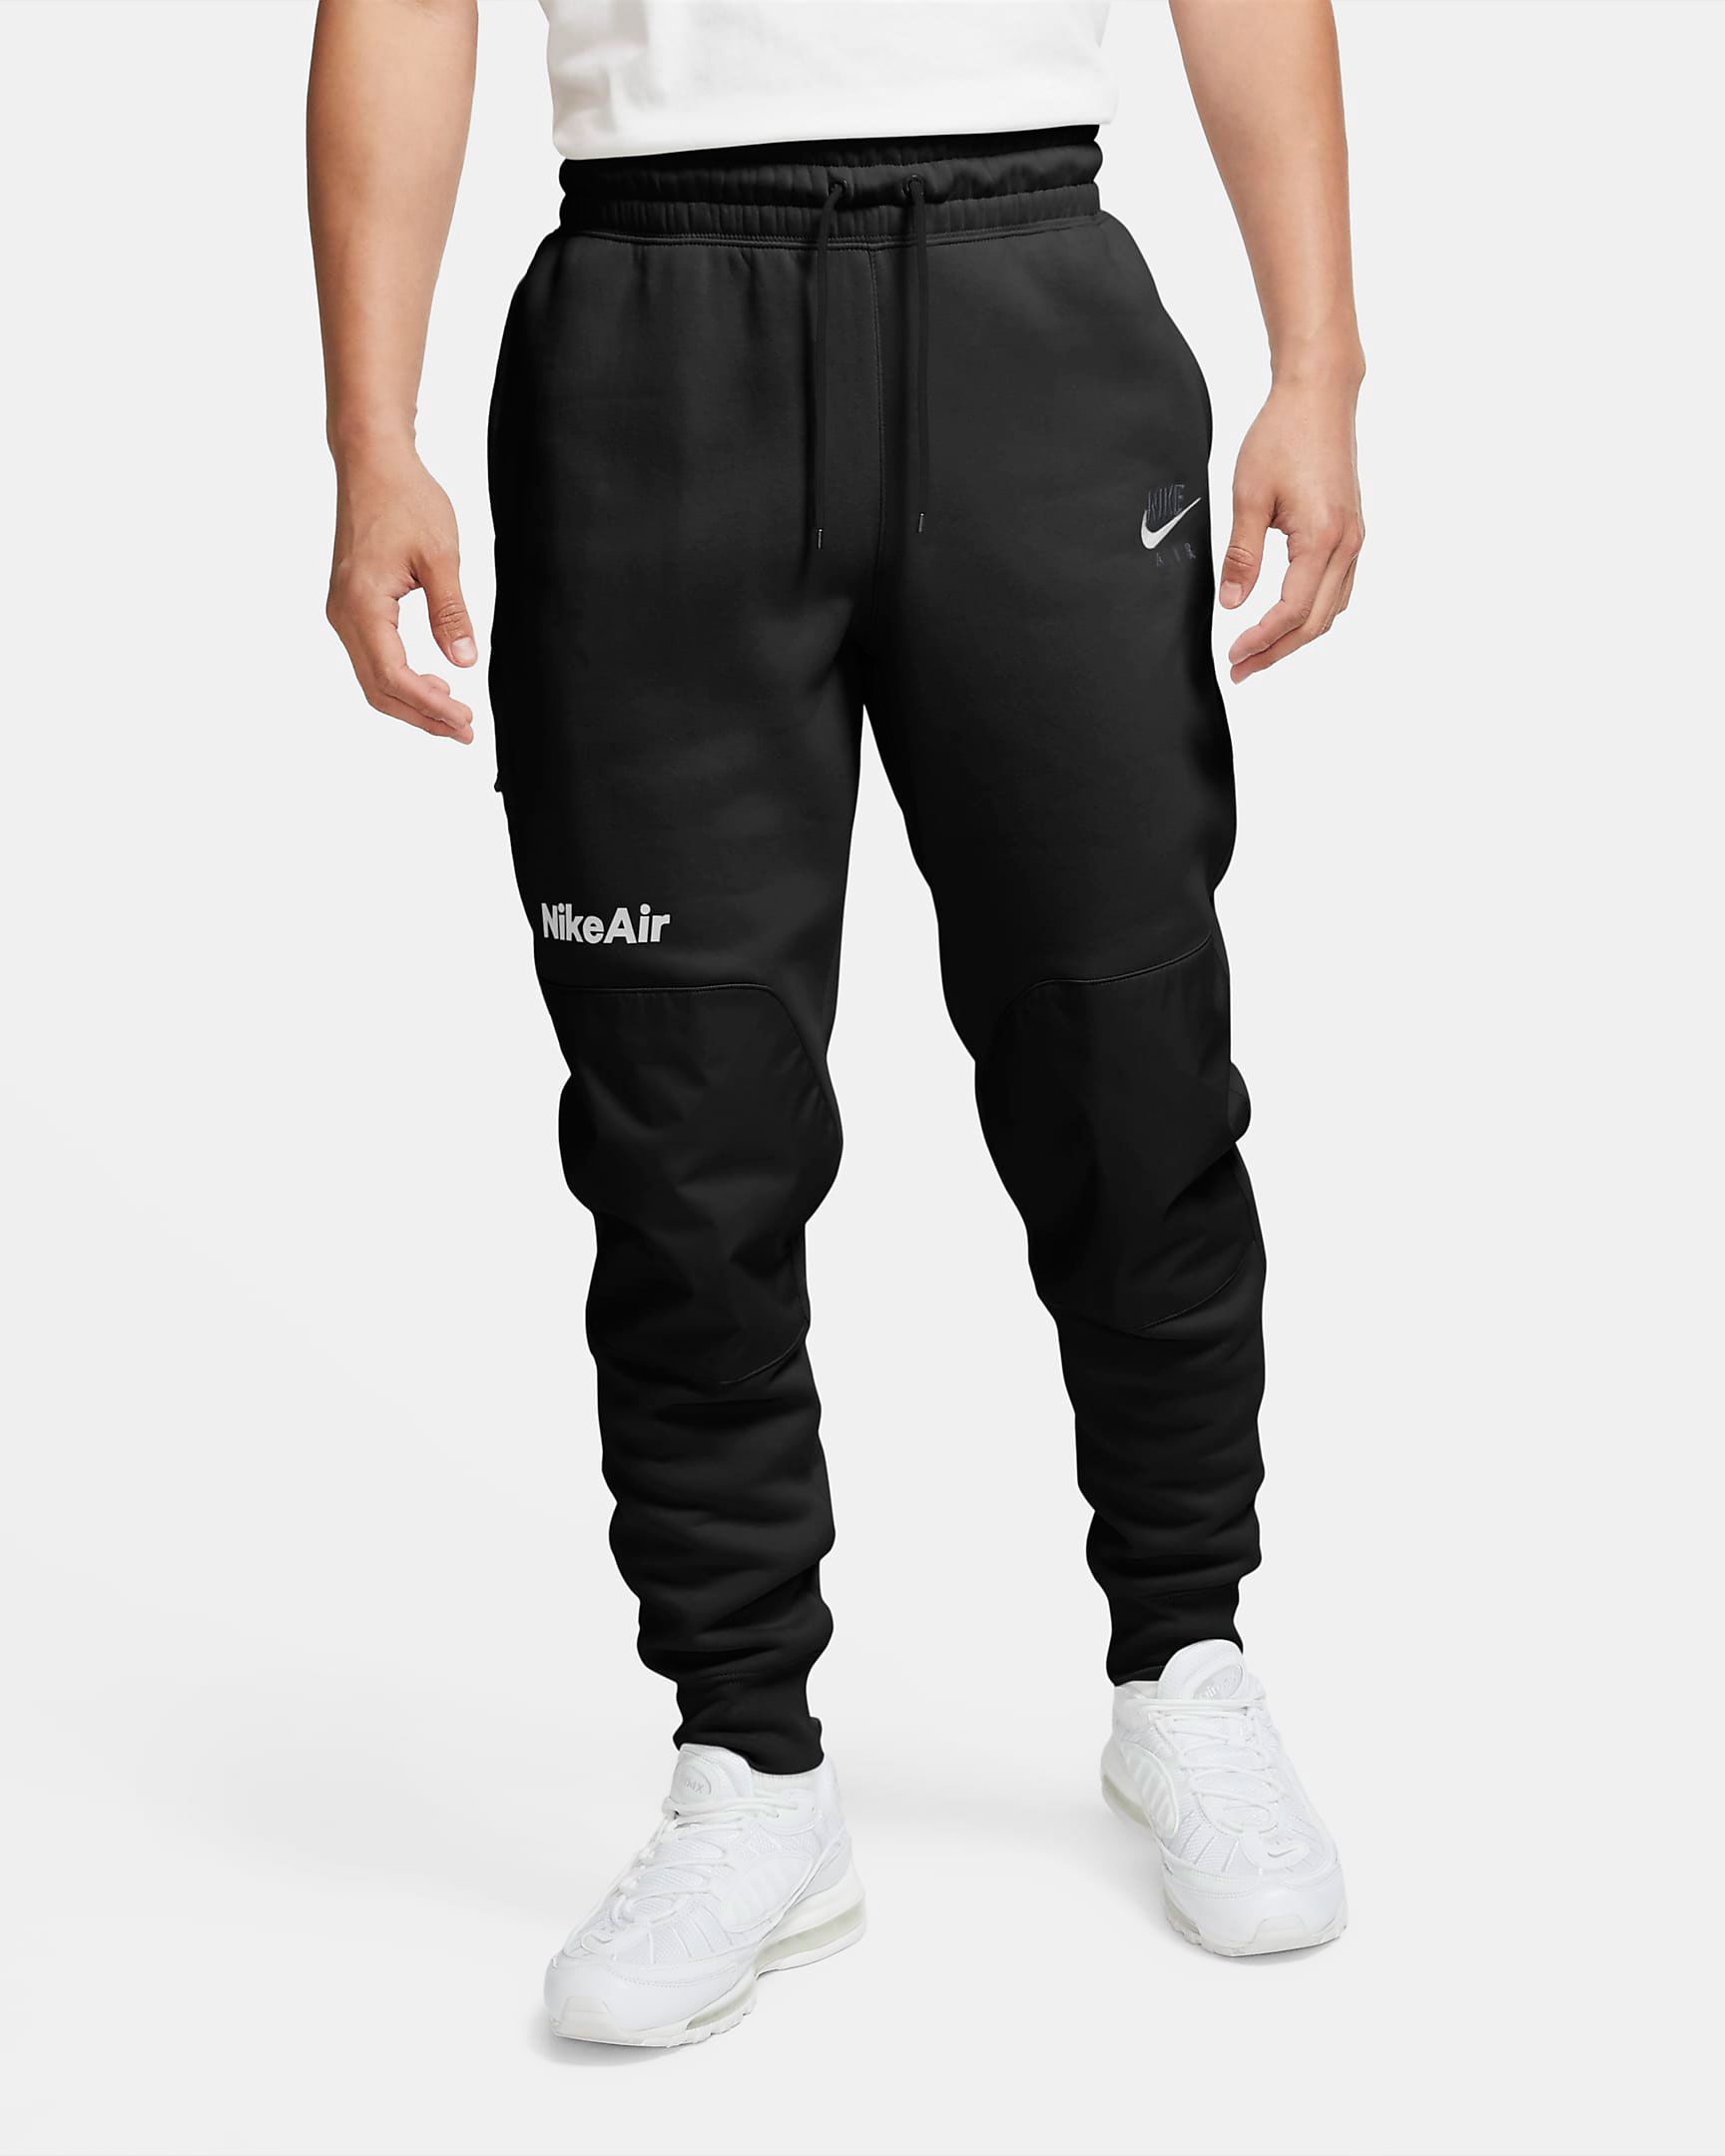 Nike Air Fleece Pants for Fall 2020 